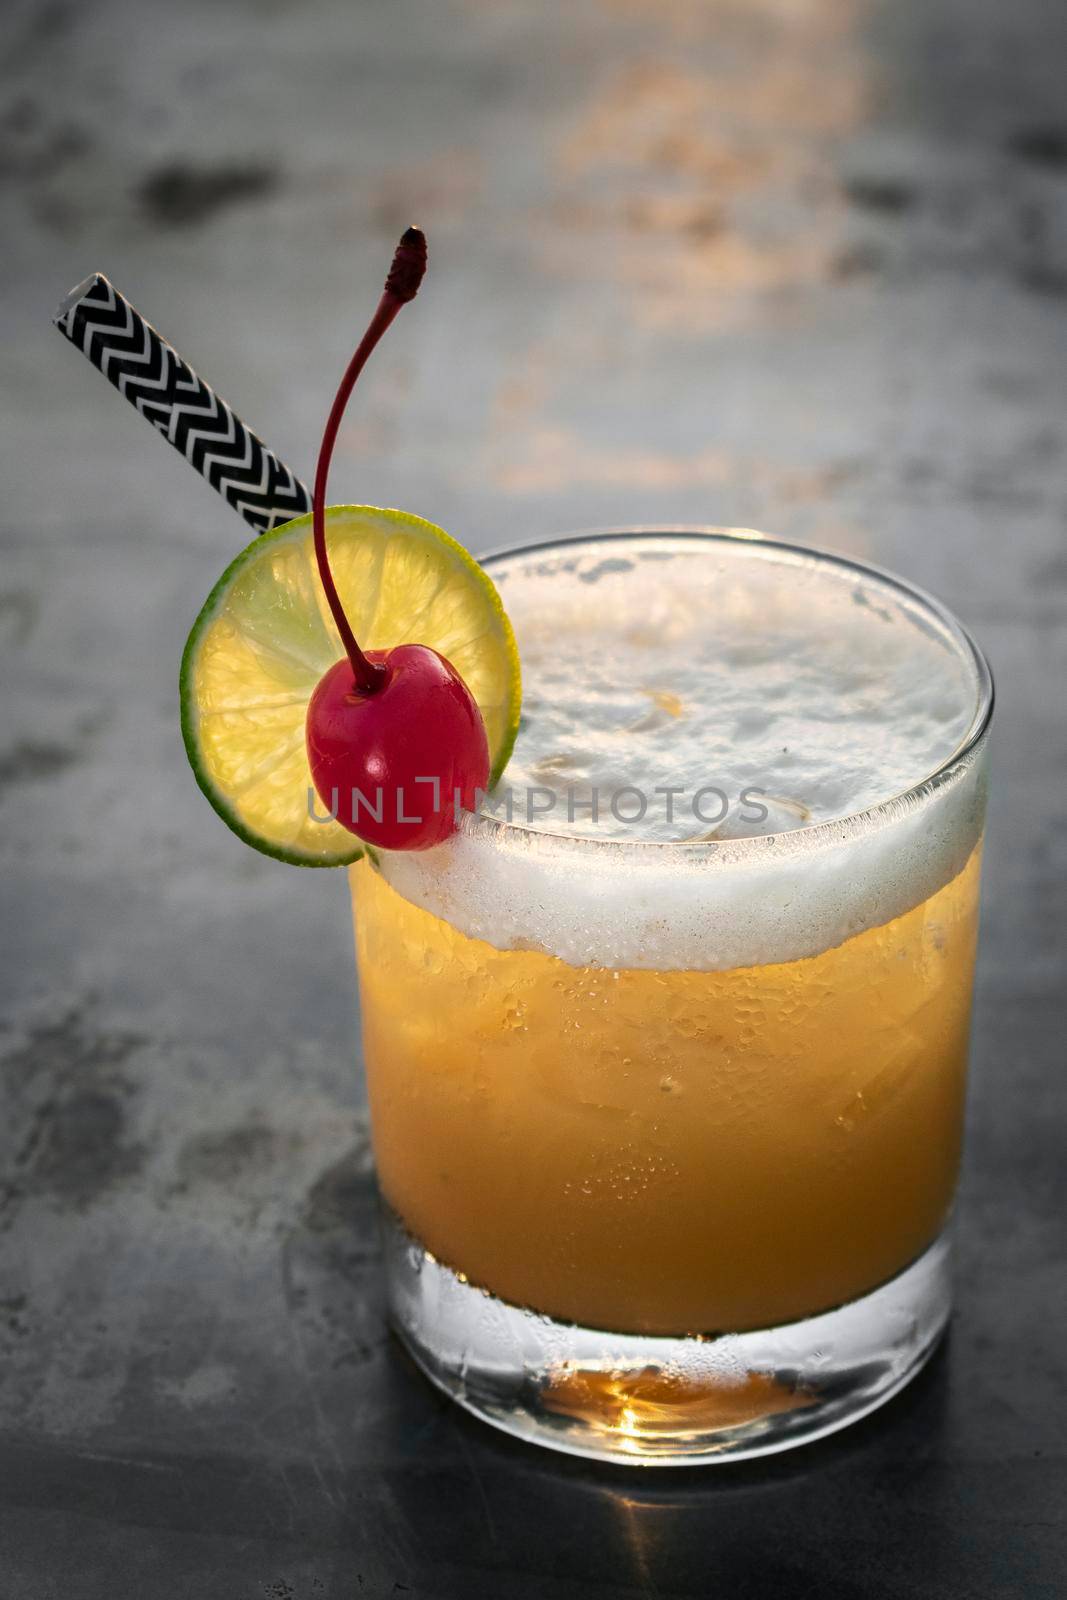 peach screwdriver mixed vodka cocktail drink outdoors at sunset bar